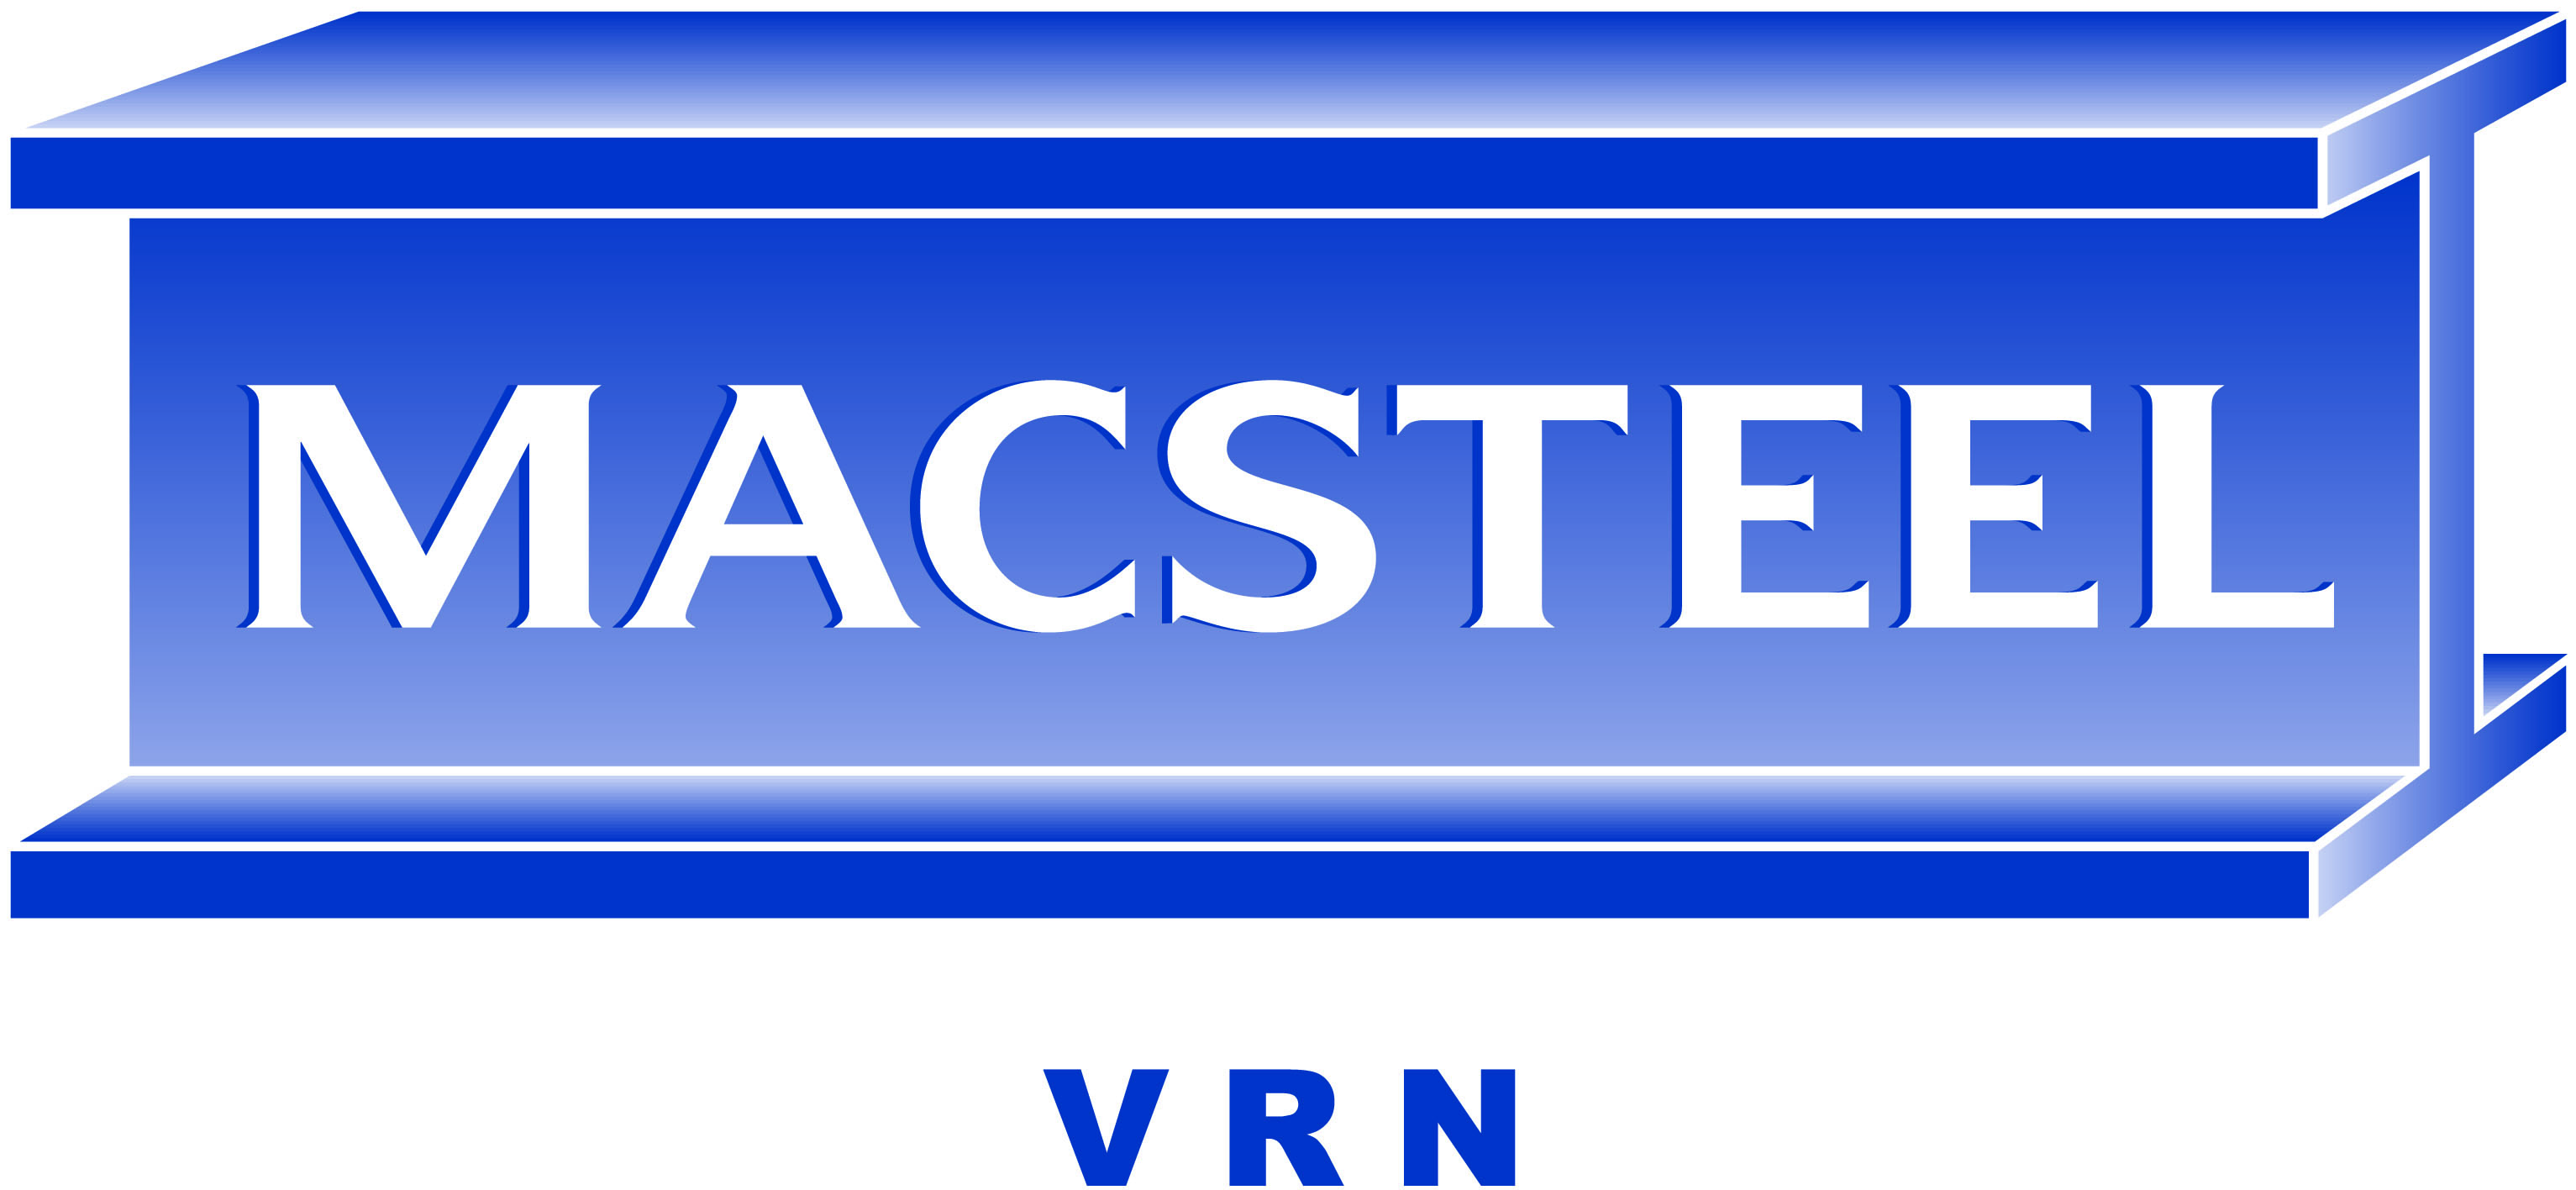 Macsteel Vrn - Welkom logo